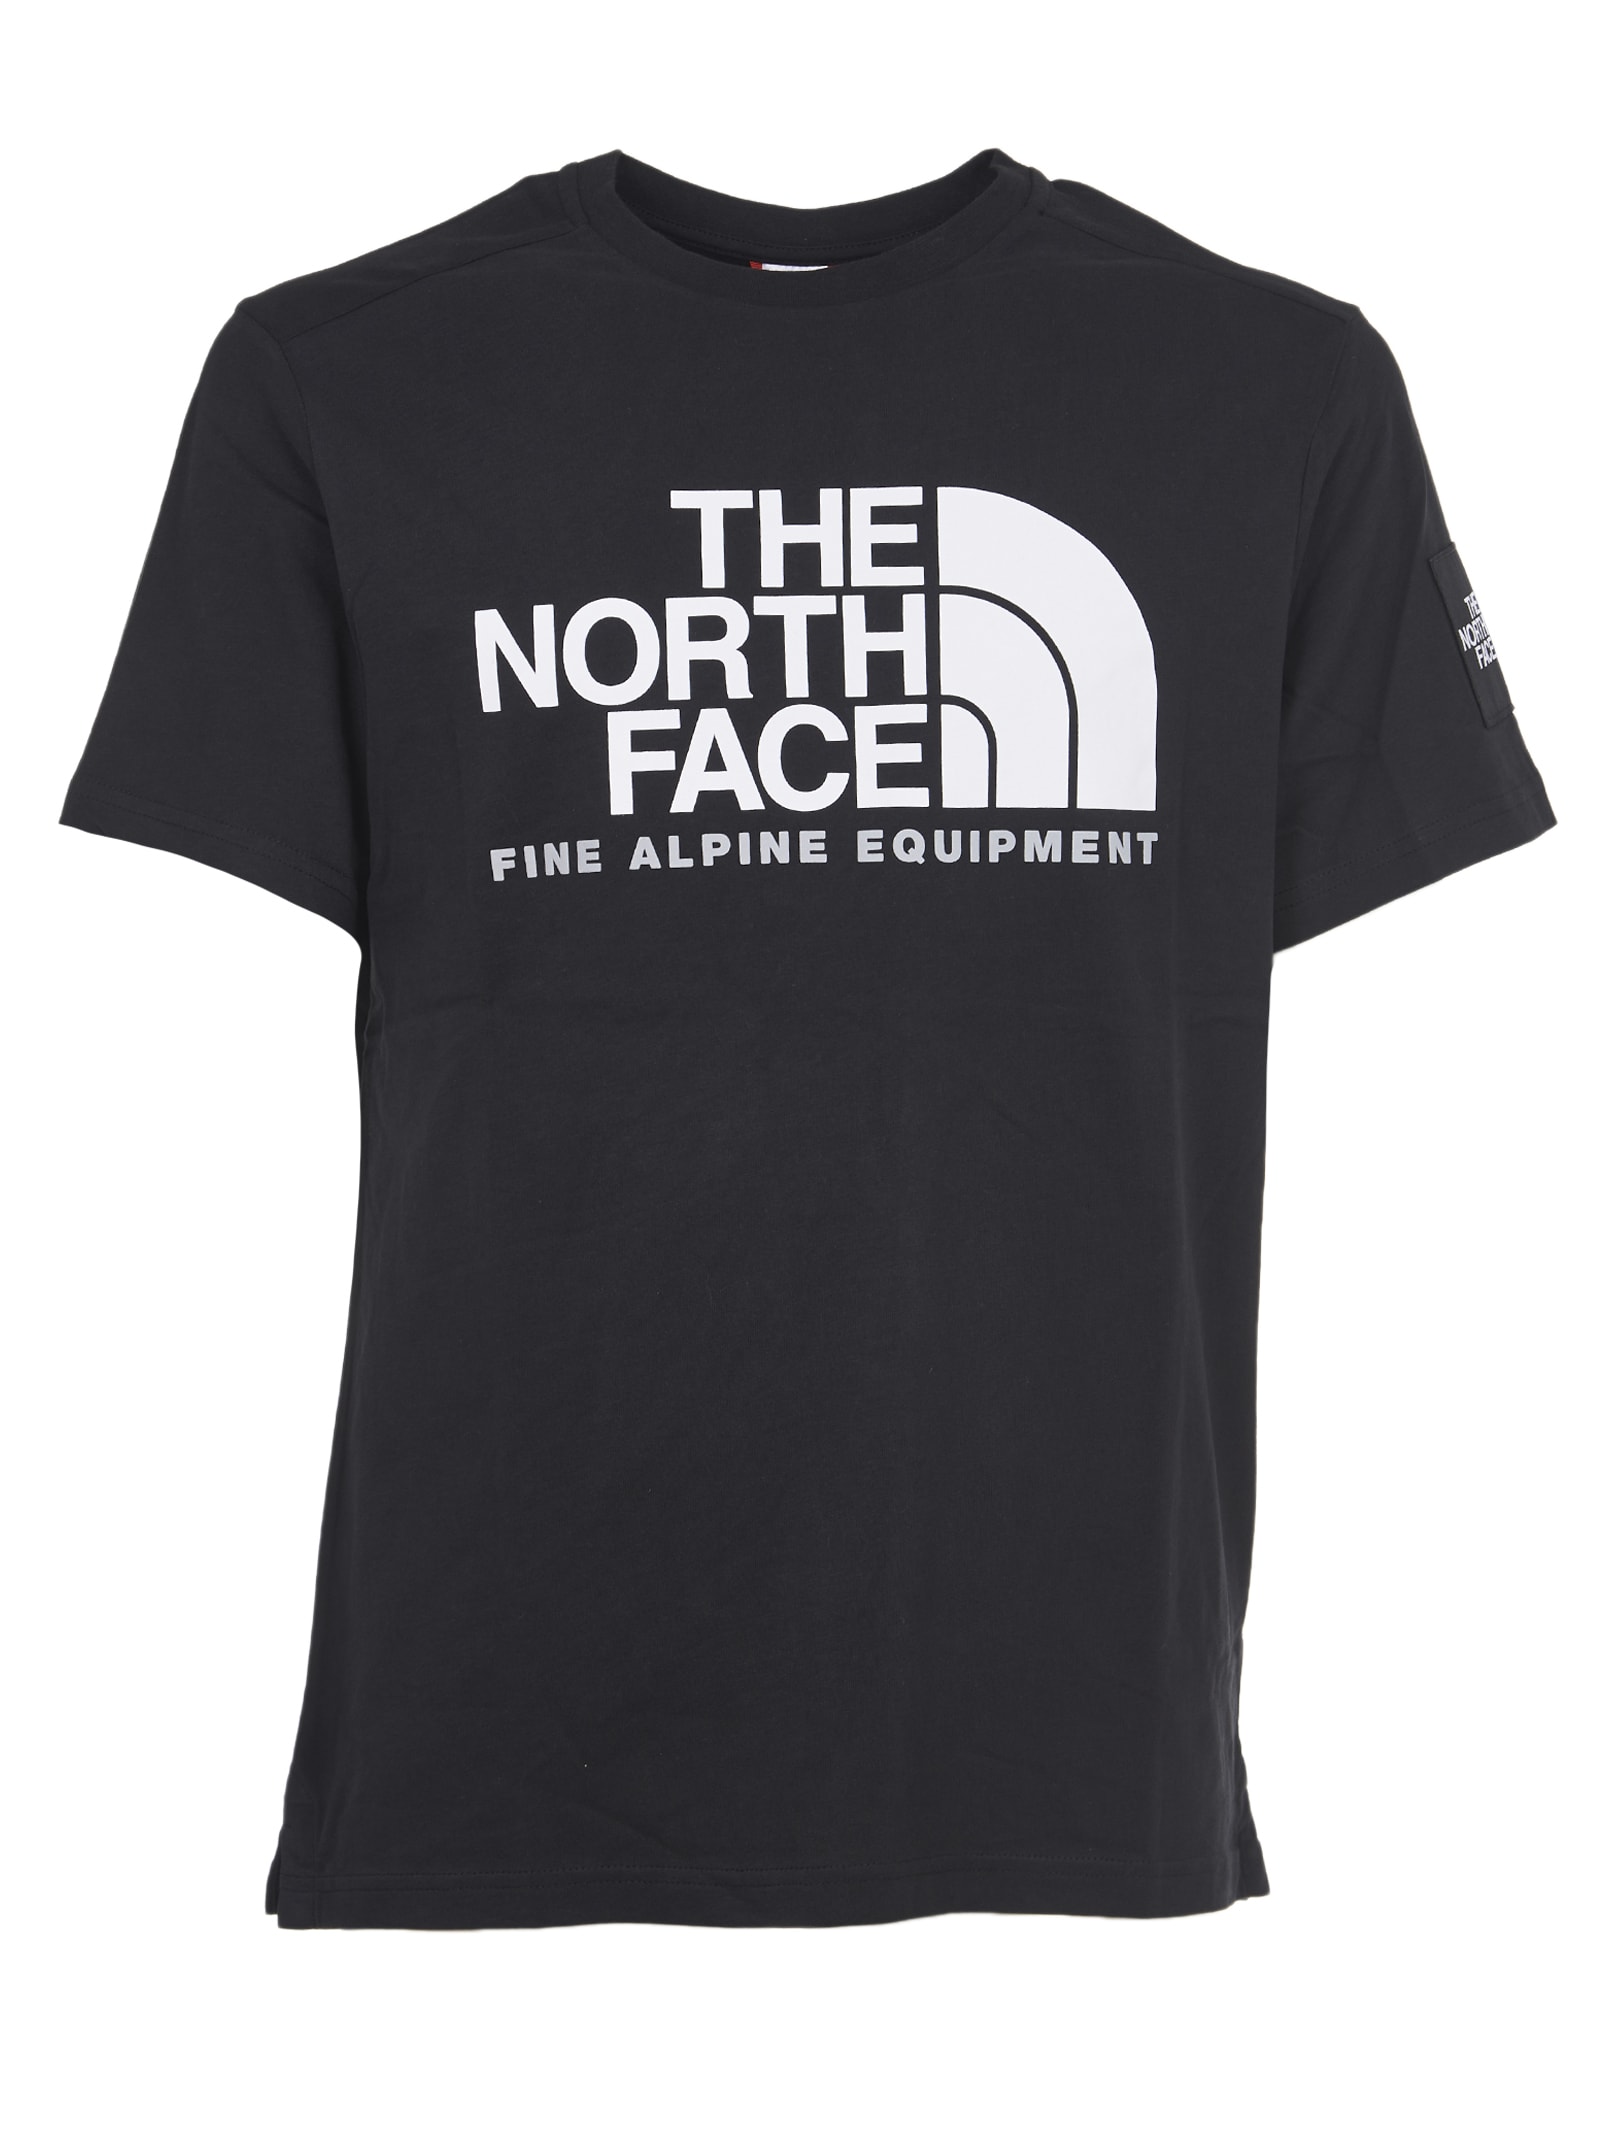 The North Face Black Fine Alpine T-shirt